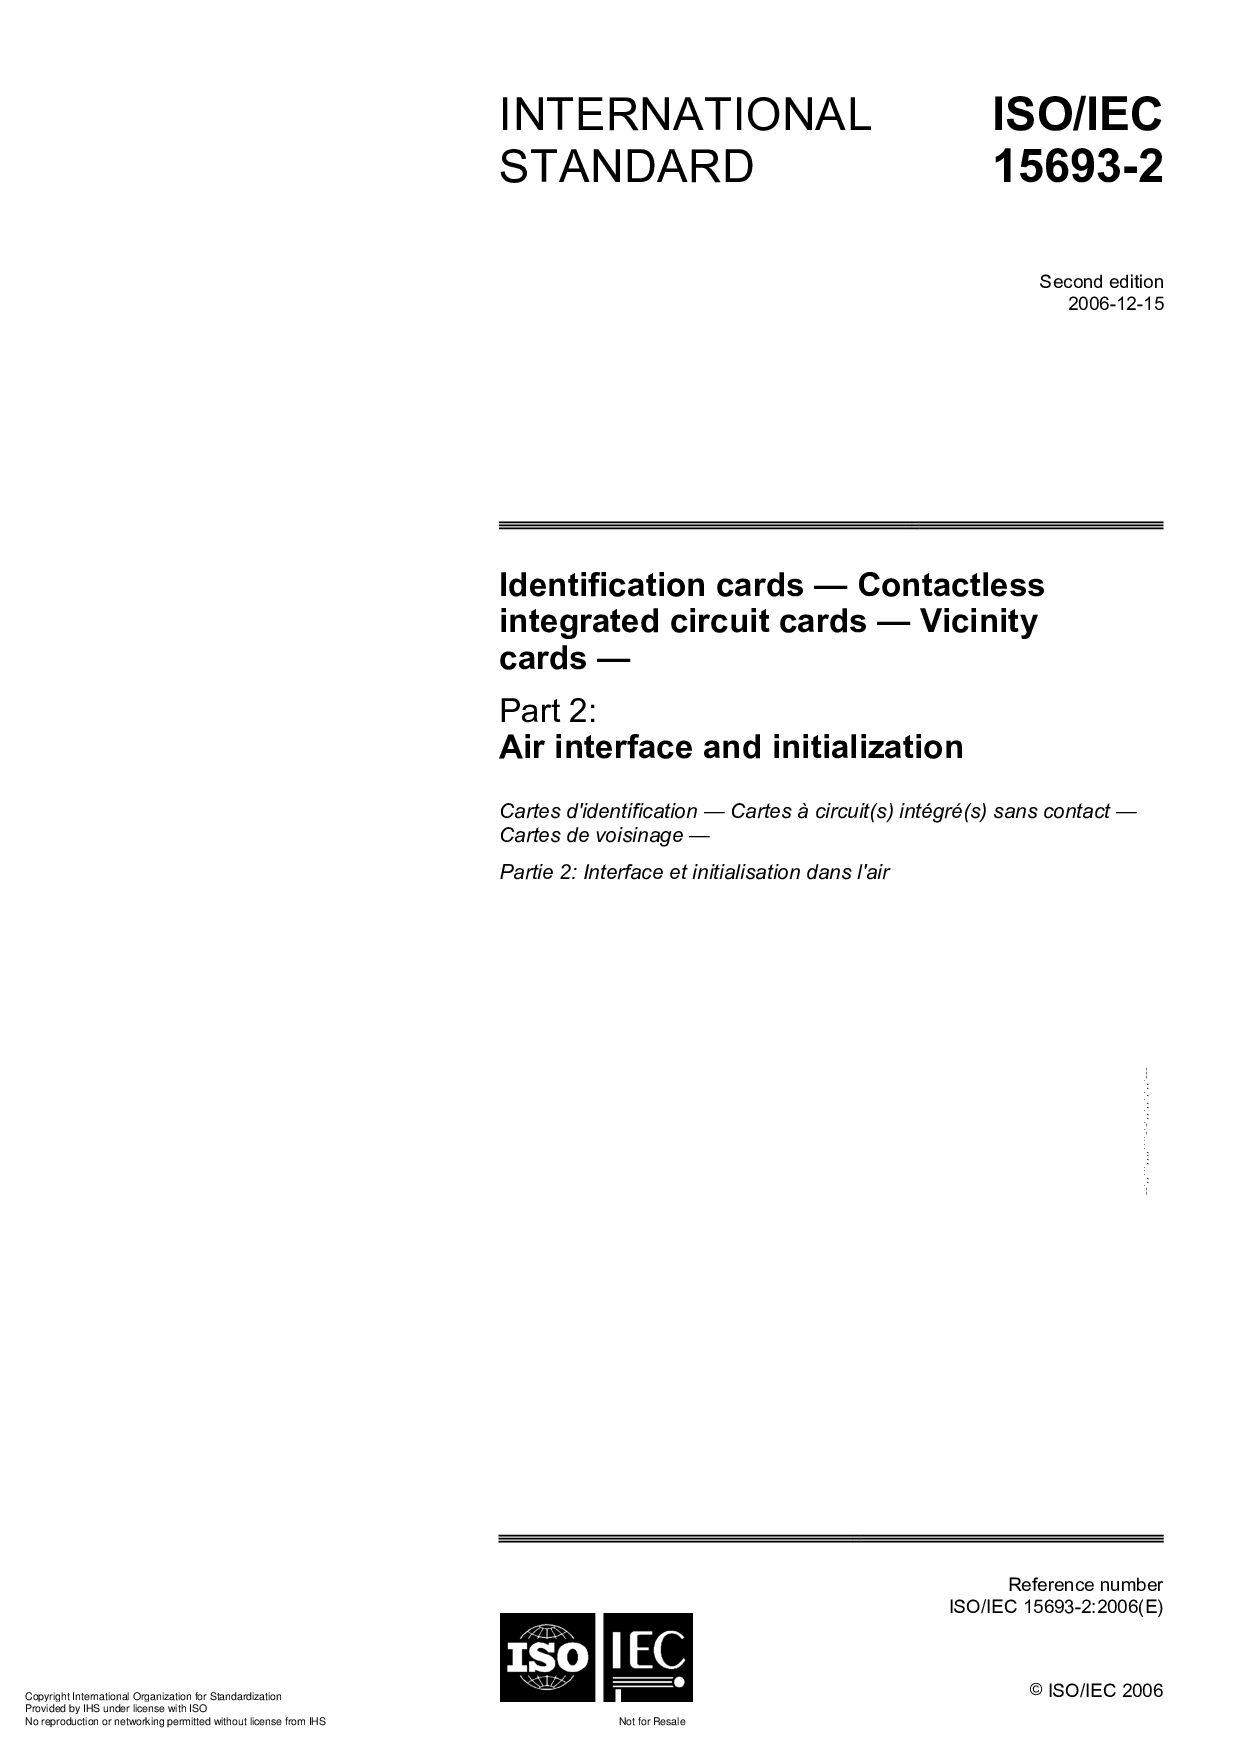 ISO/IEC 15693-2:2006